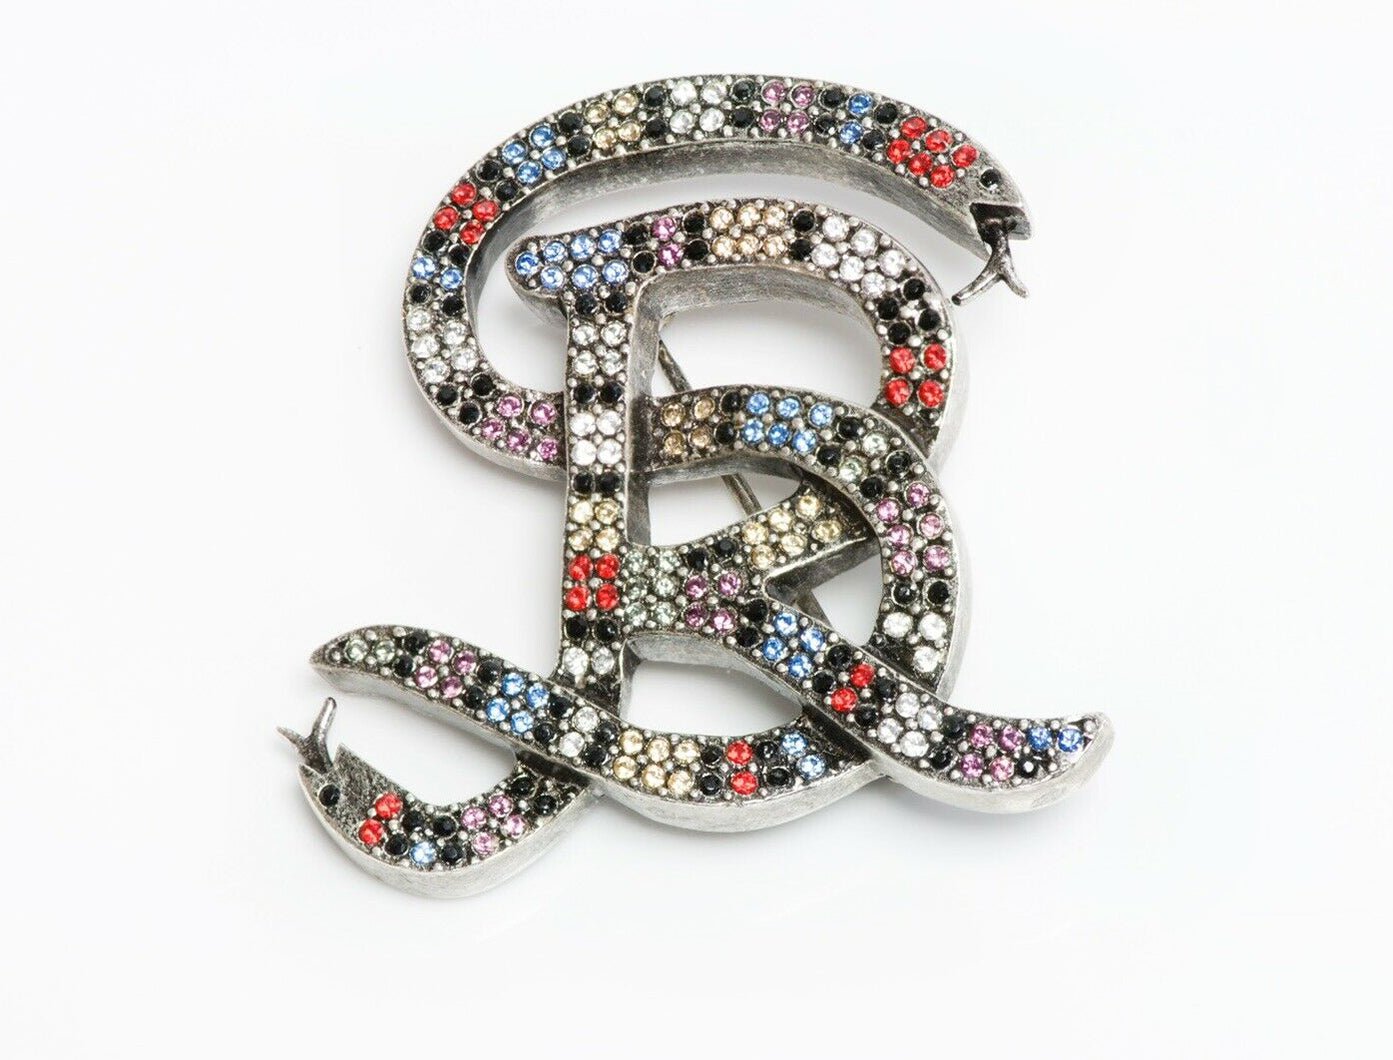 Sonia Rykiel Paris Multicolor Crystal Snake Logo Brooch